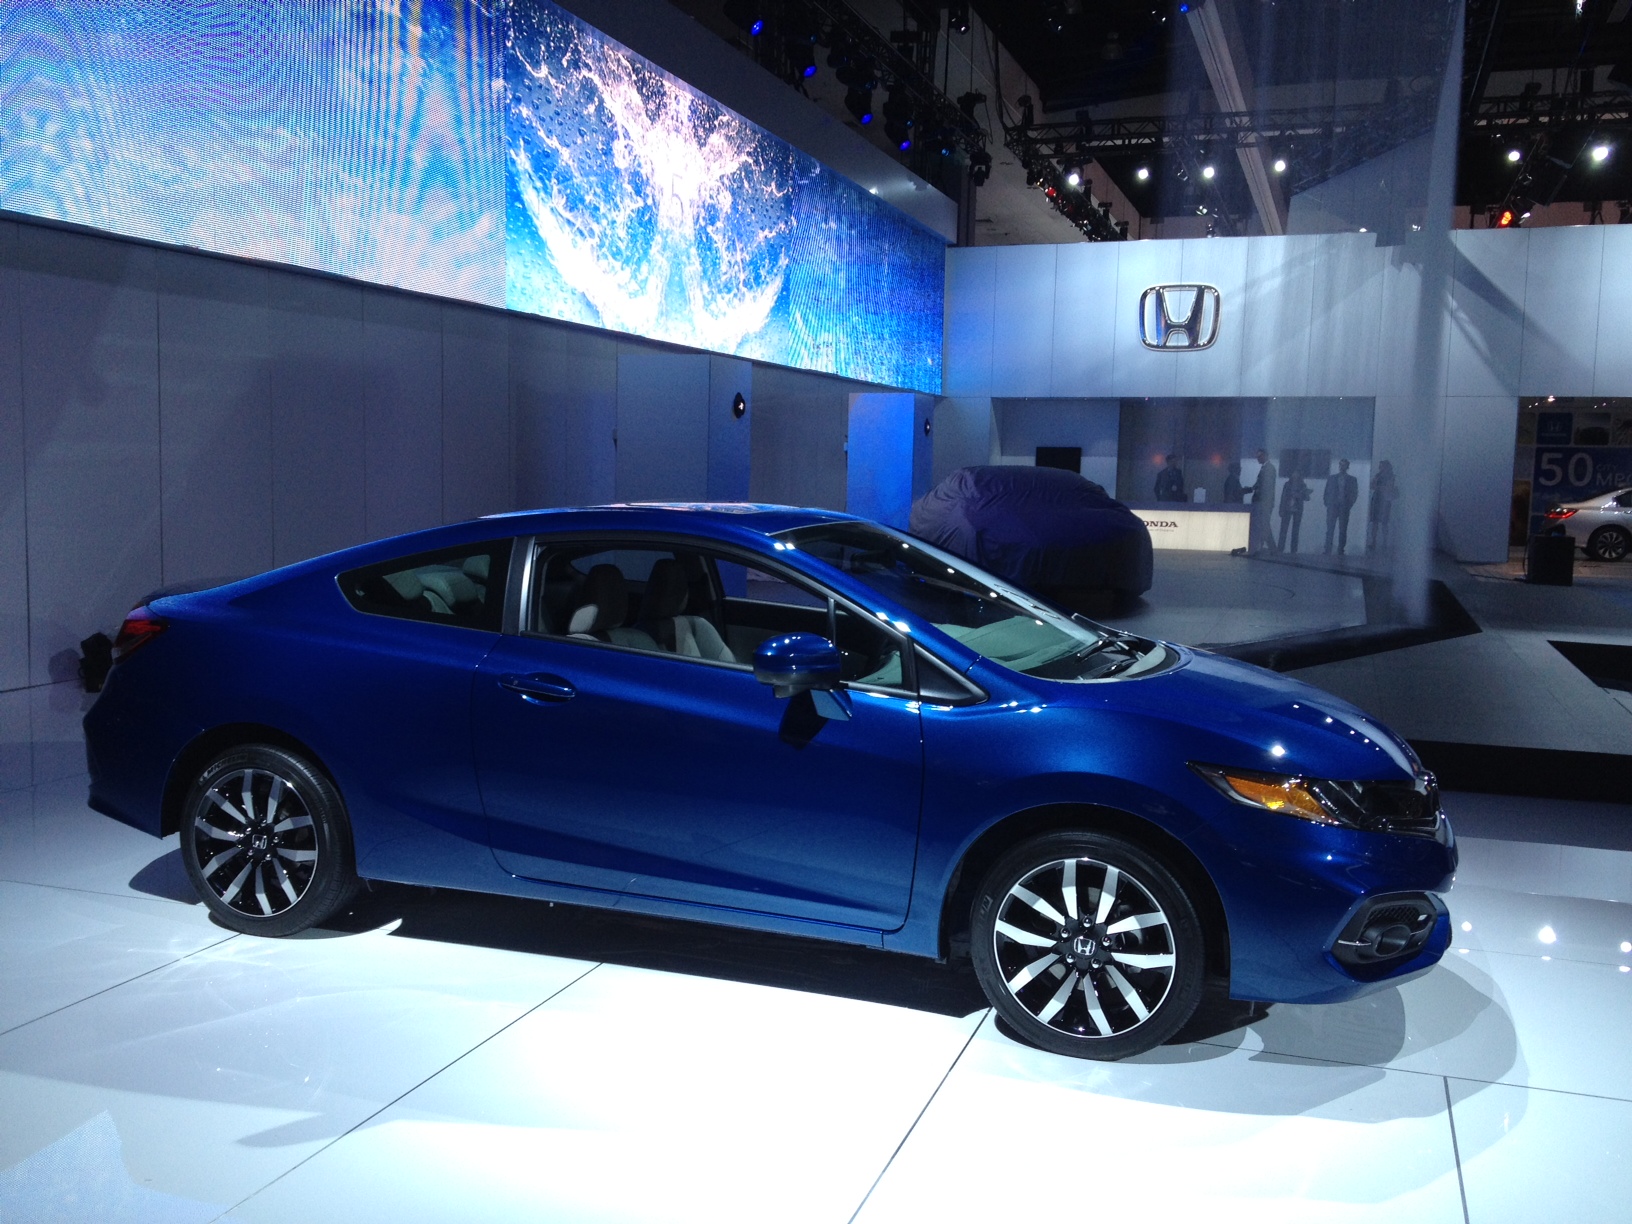 Honda Civic Coupe 2014 Blue